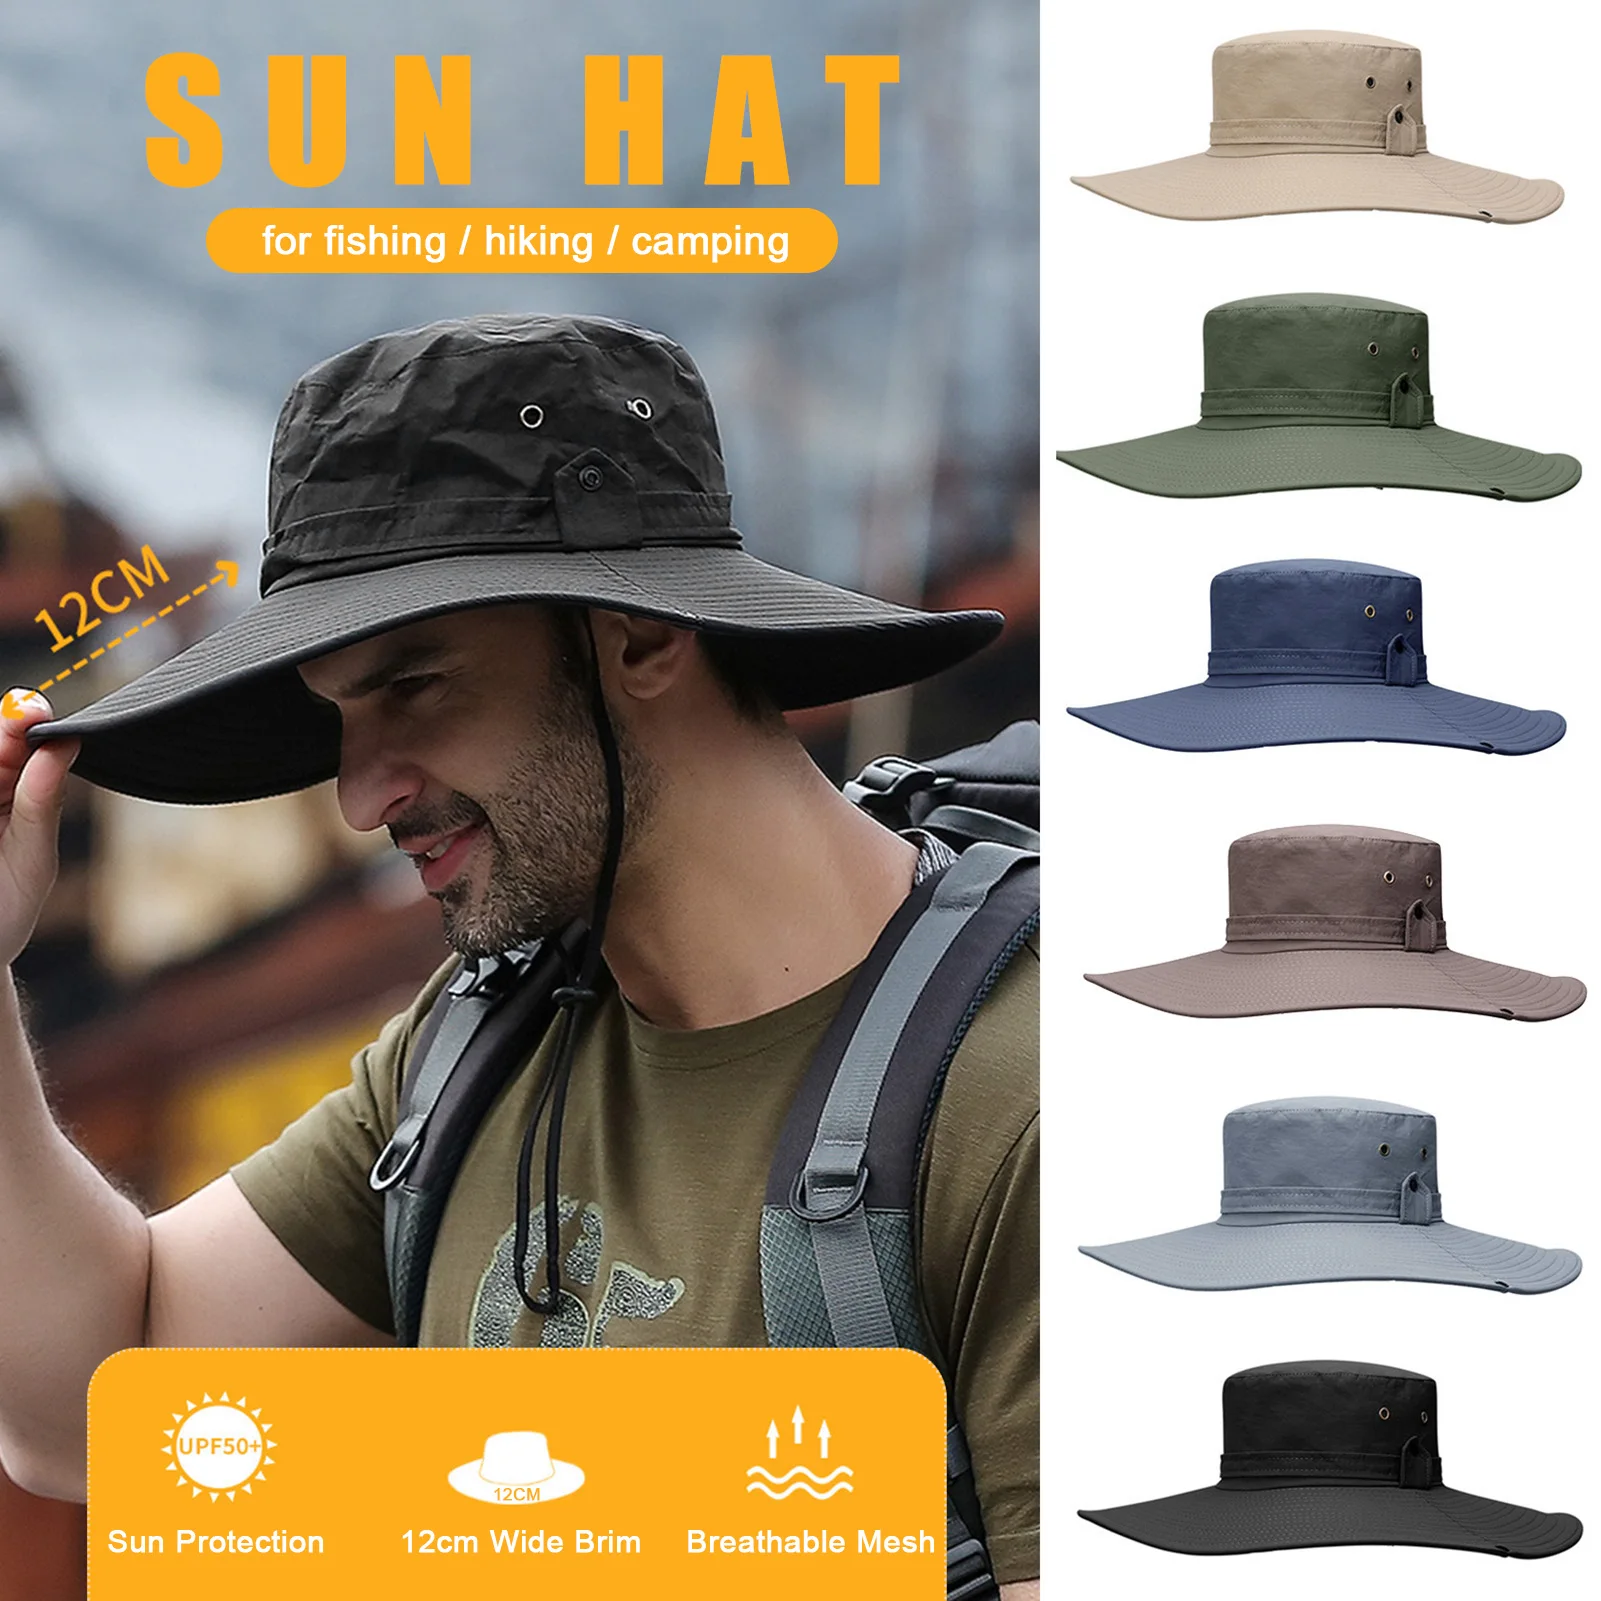 Women's Bucket Hat Foldable Solid Color Light Hiking Hat Big Brim  Waterproof Outdoor Camping Fishing Cap